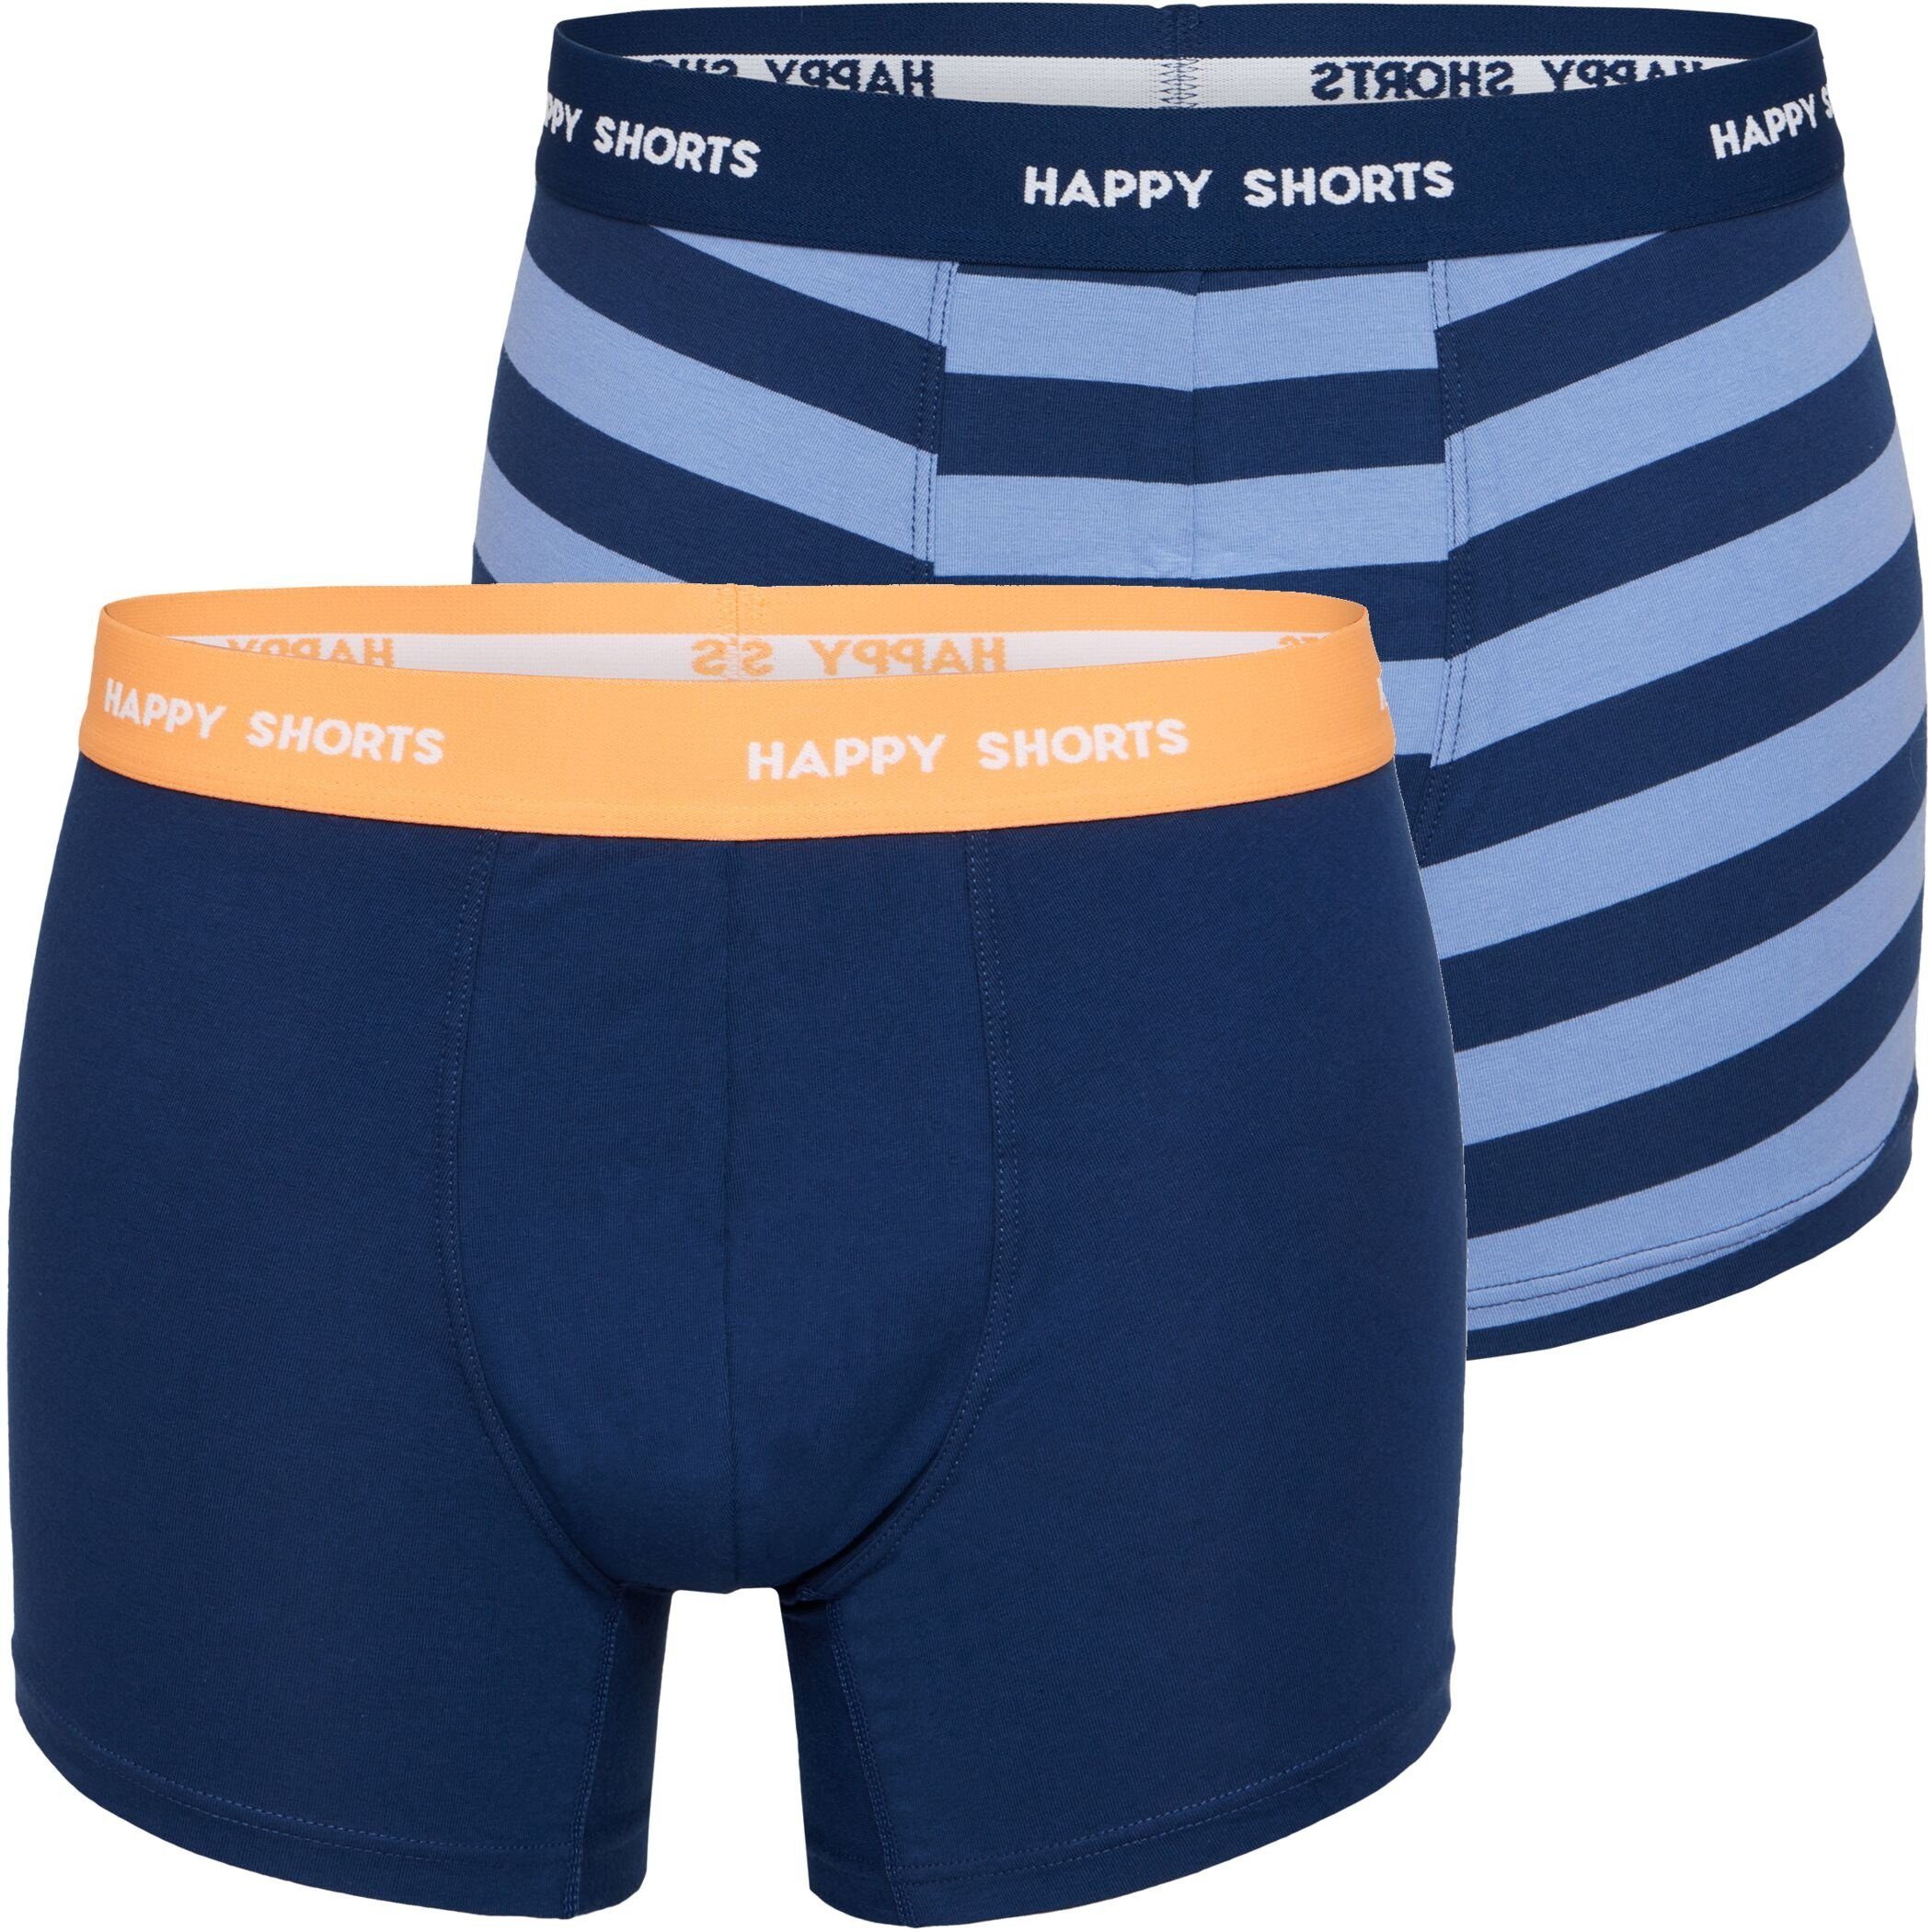 HAPPY SHORTS Trunk 2 Happy Shorts Jersey Trunk Herren Boxershorts Pant Blau Streifen (1-St) | Boxershorts